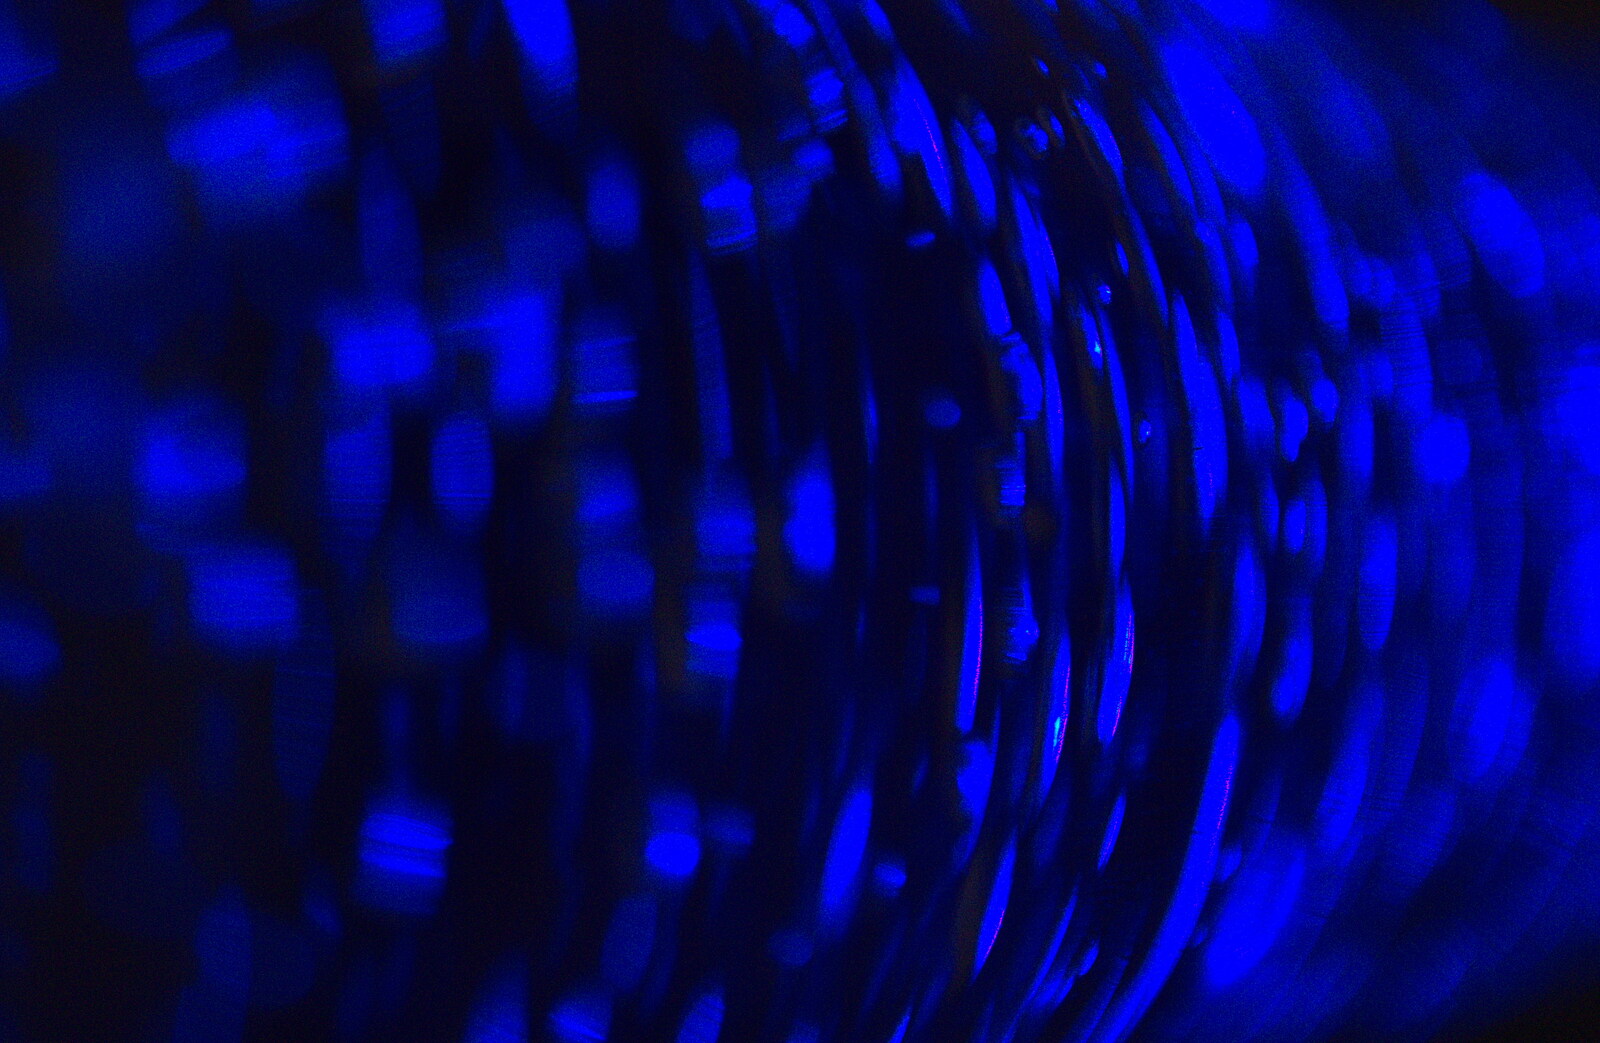 Deep blue lighting from SwiftKey Innovation Week, Southwark Bridge Road, London - 7th October 2015